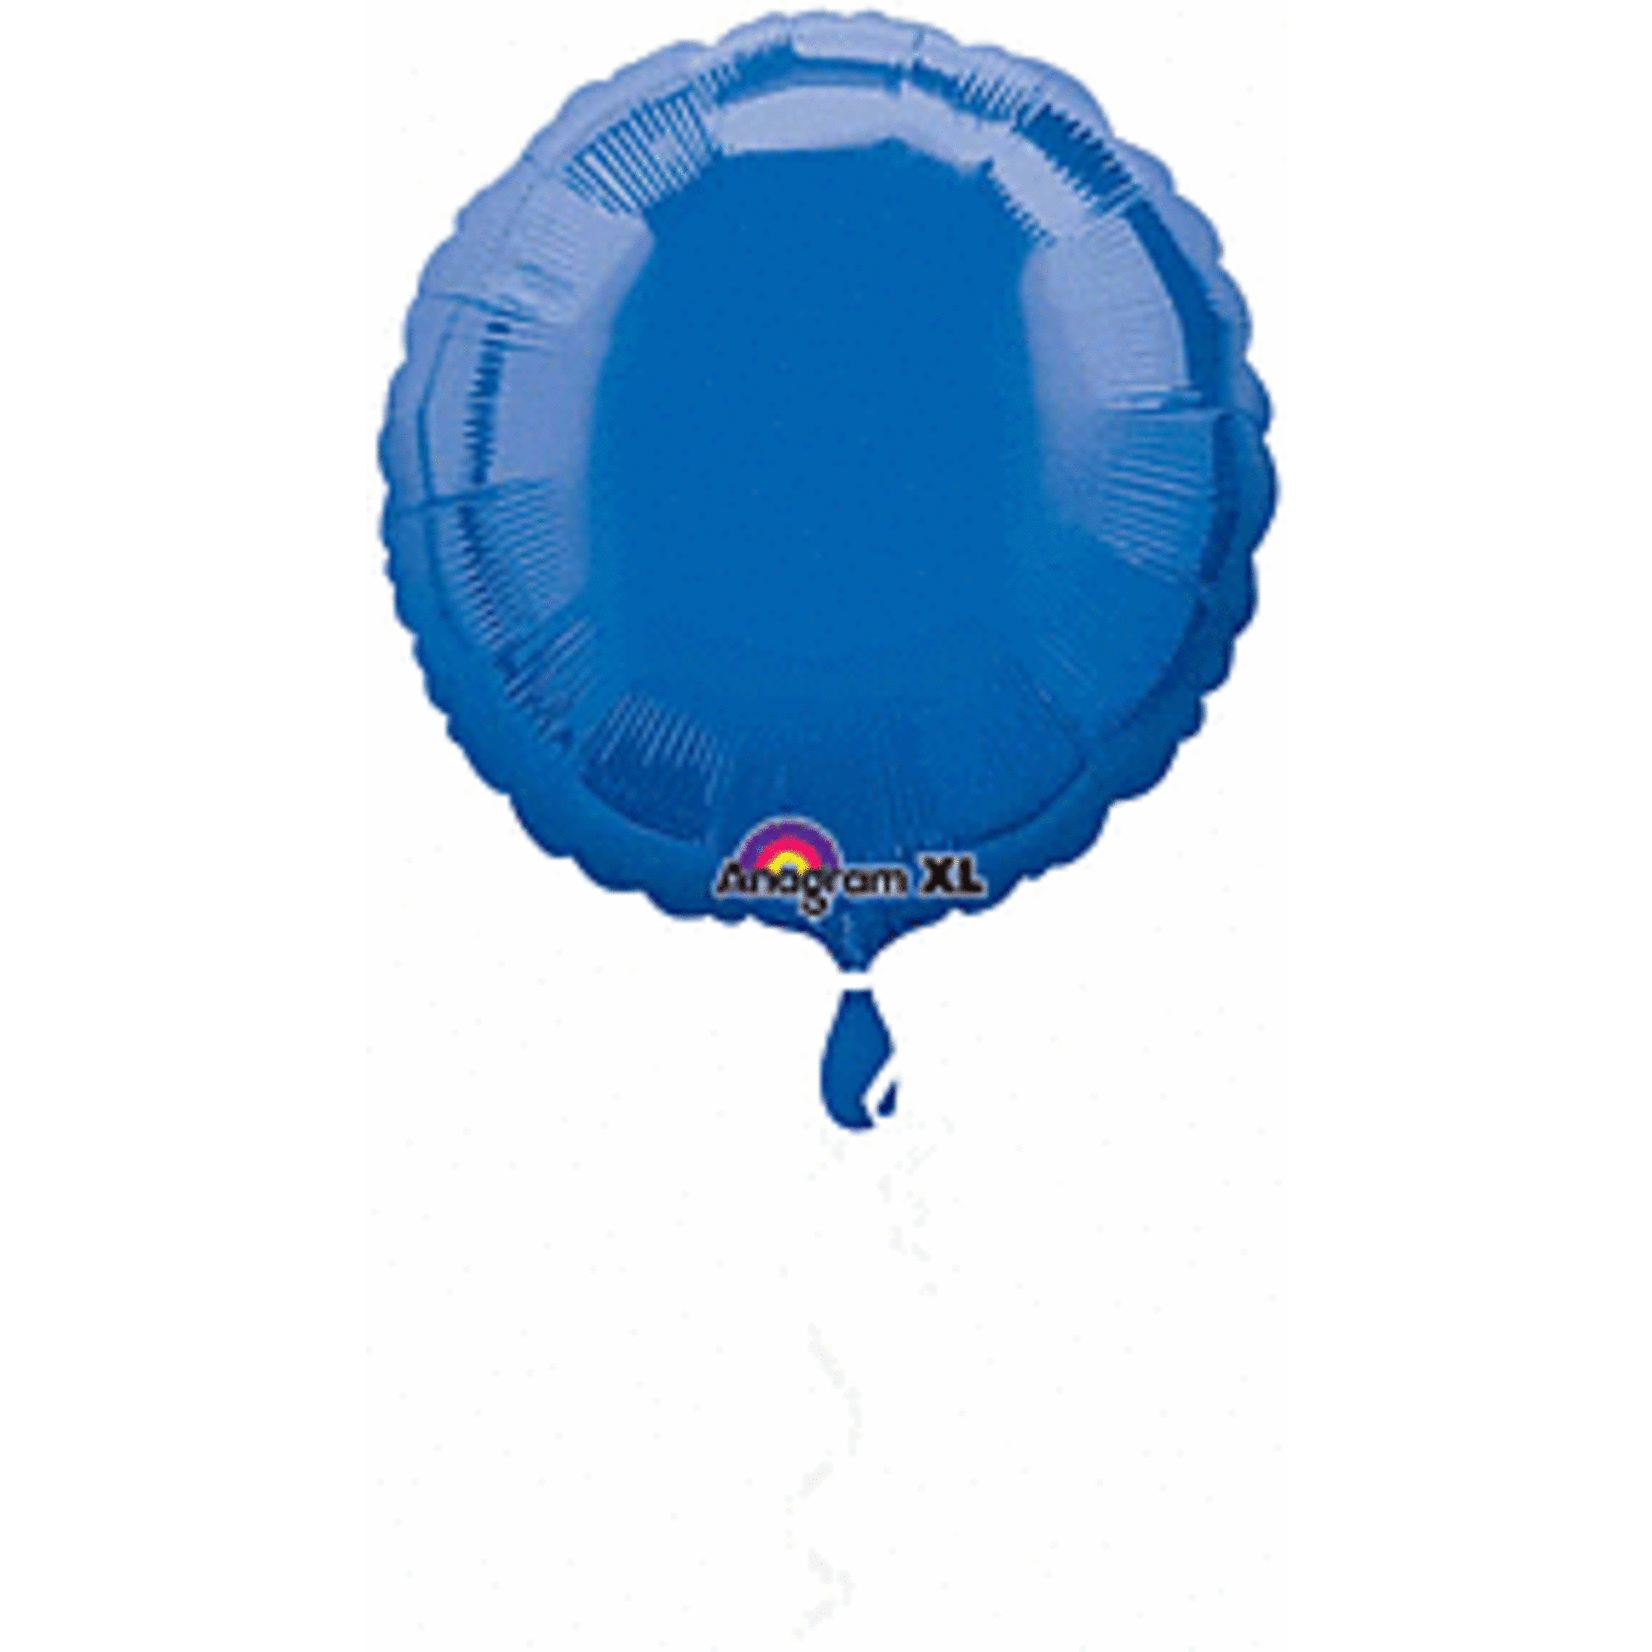 18'' Round Royal Blue Foil Balloon